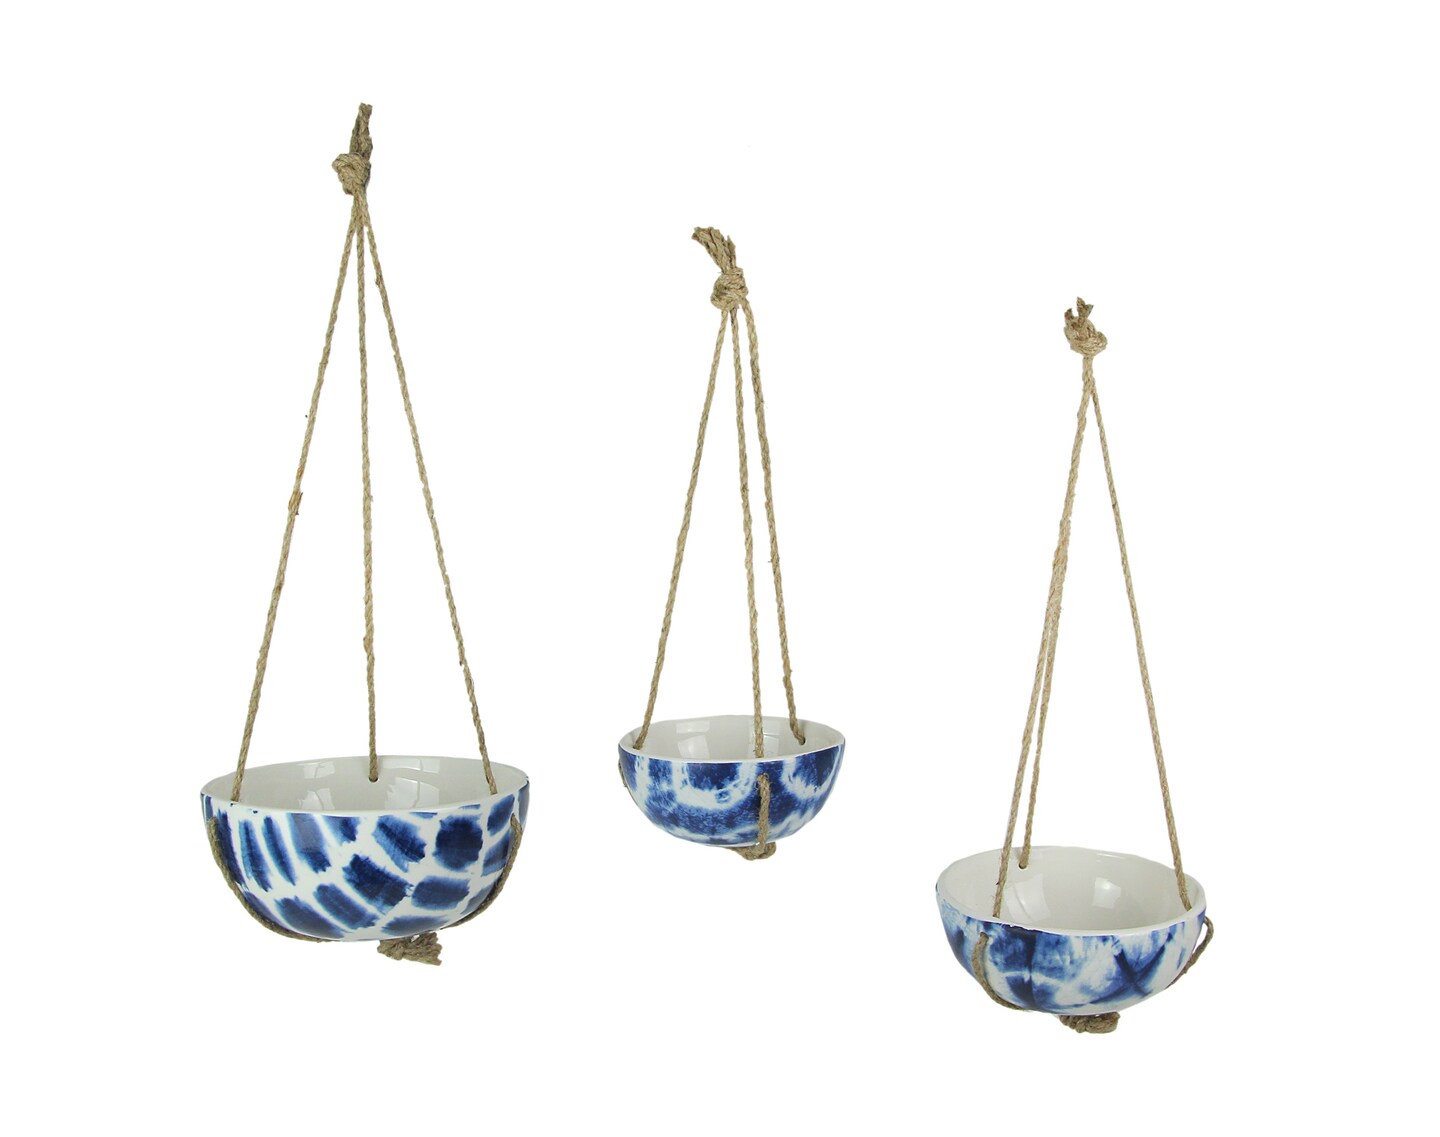 Set of 3 Blue and White Shibori Style Dyed Ceramic Hanging Mini Planters